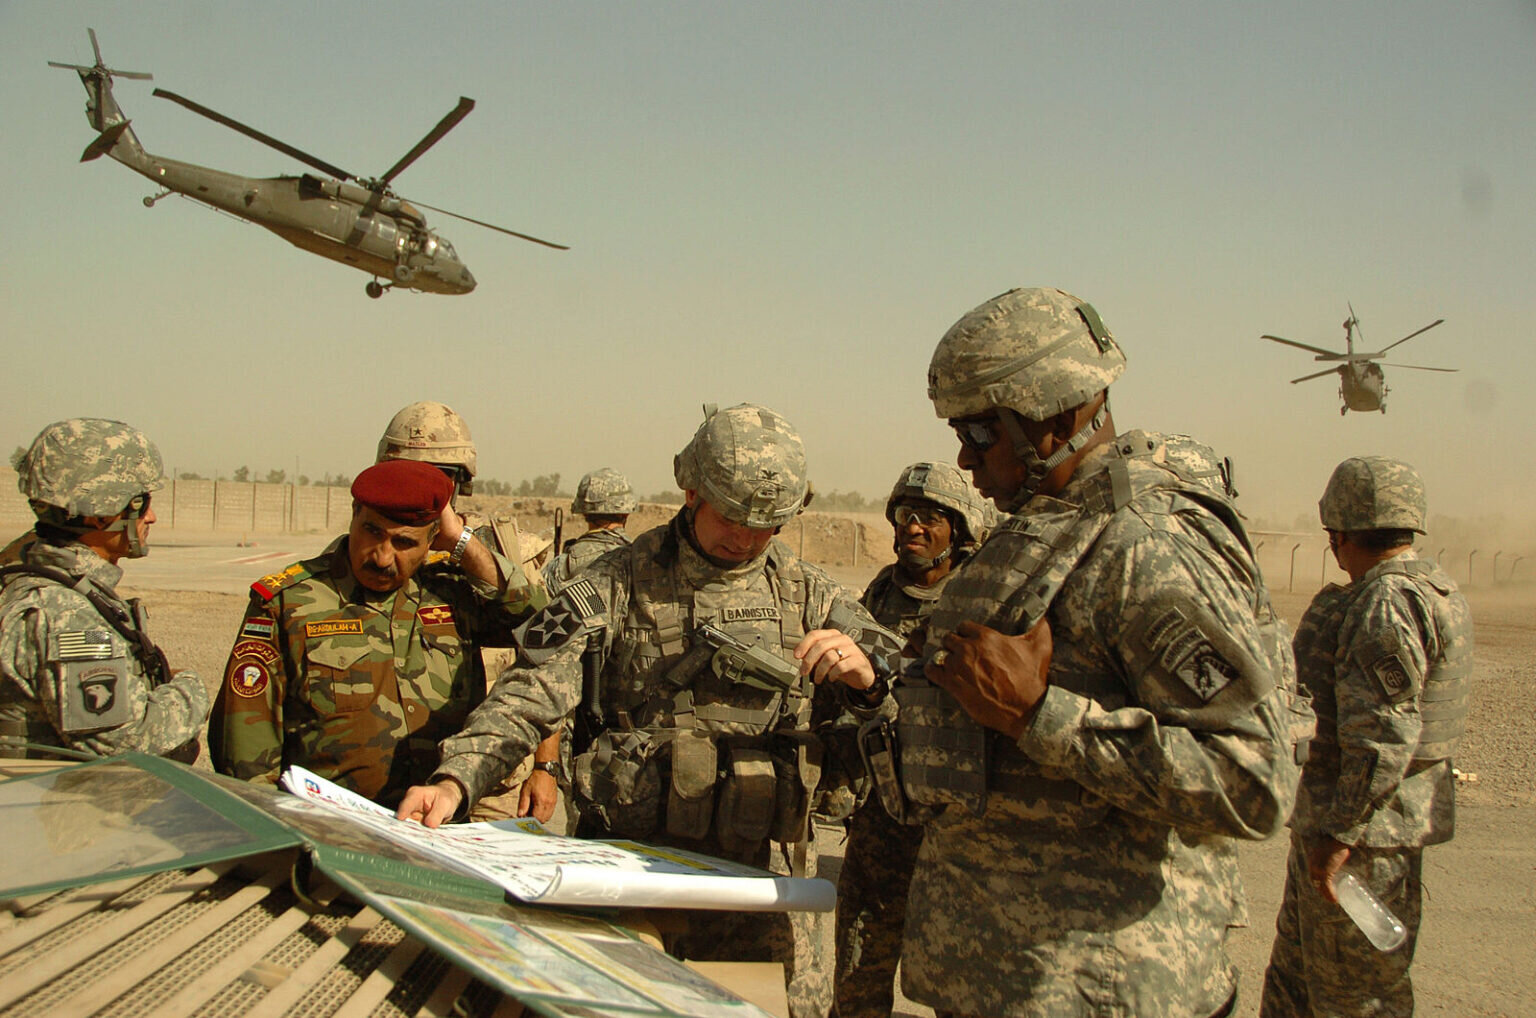  General Lloyd Austin in 2007, strategizing with U.S. and coalition officers near Baghdad, Iraq. Photo courtesy Army Spec. Nicholas Hernandez, U.S. Army via Wikimedia Commons. 